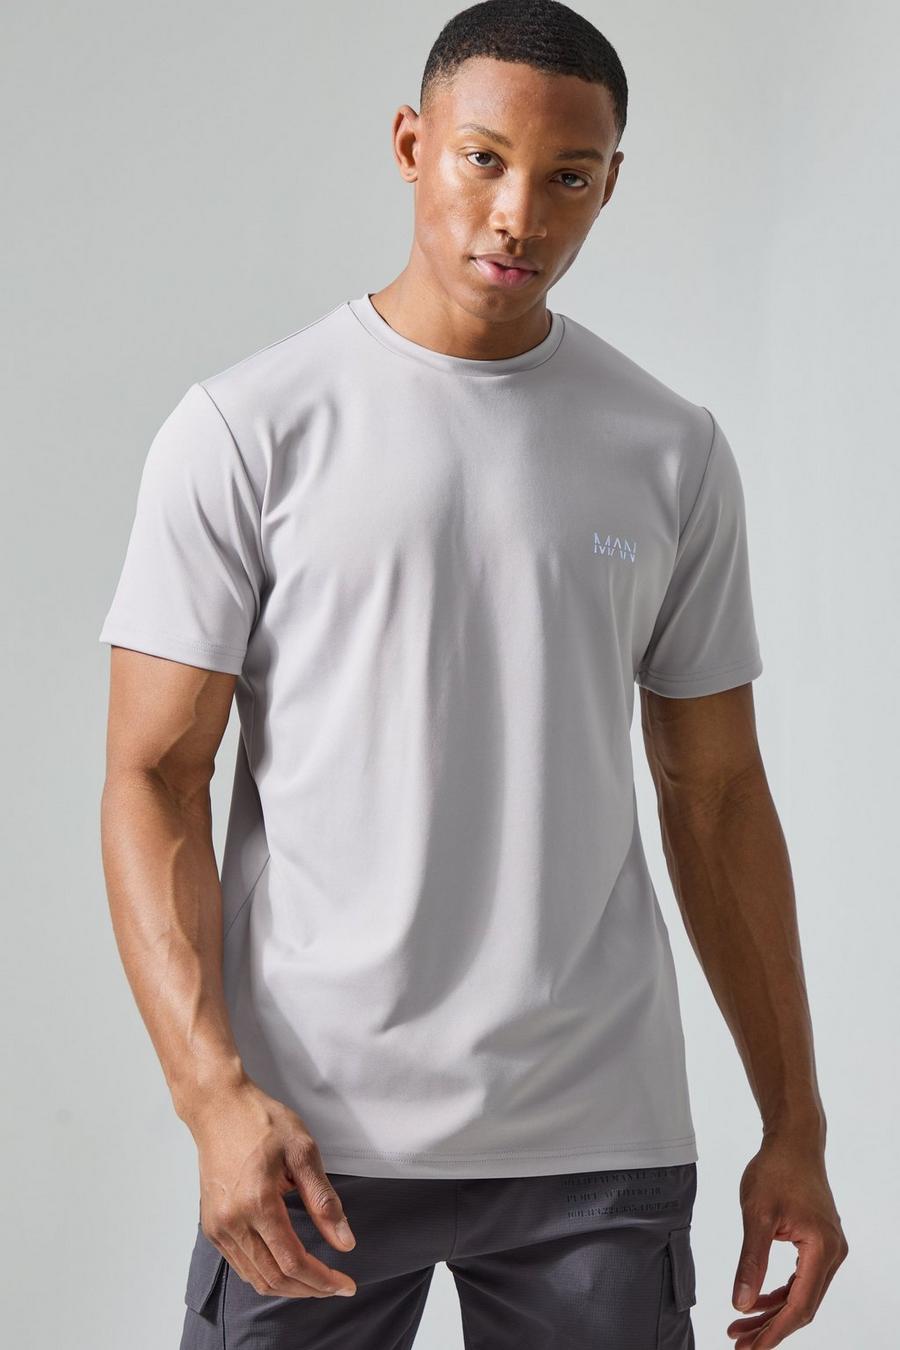 Man Active Performance Sport T-Shirt, Grey